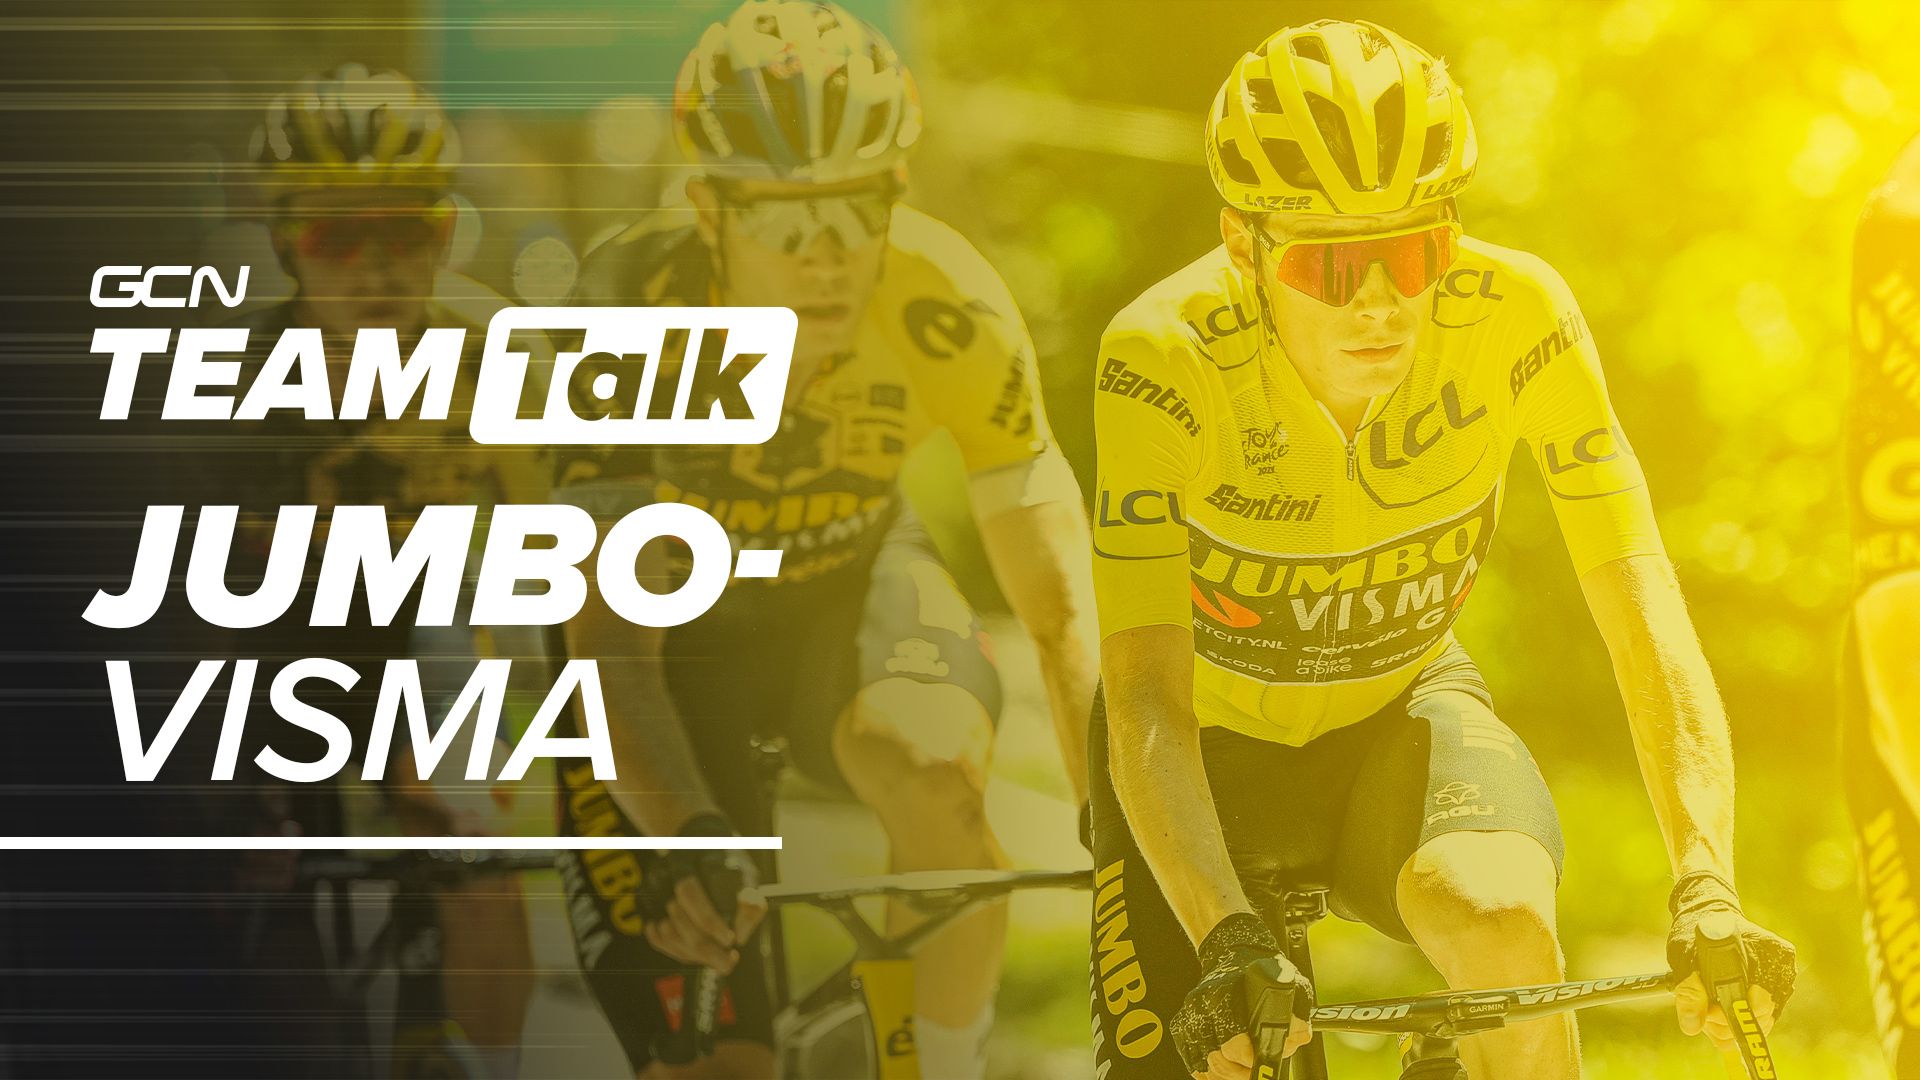 Jumbo-Visma Top Team with 69 Victories - UAE Team Emirates Best UCI Team -  PezCycling News